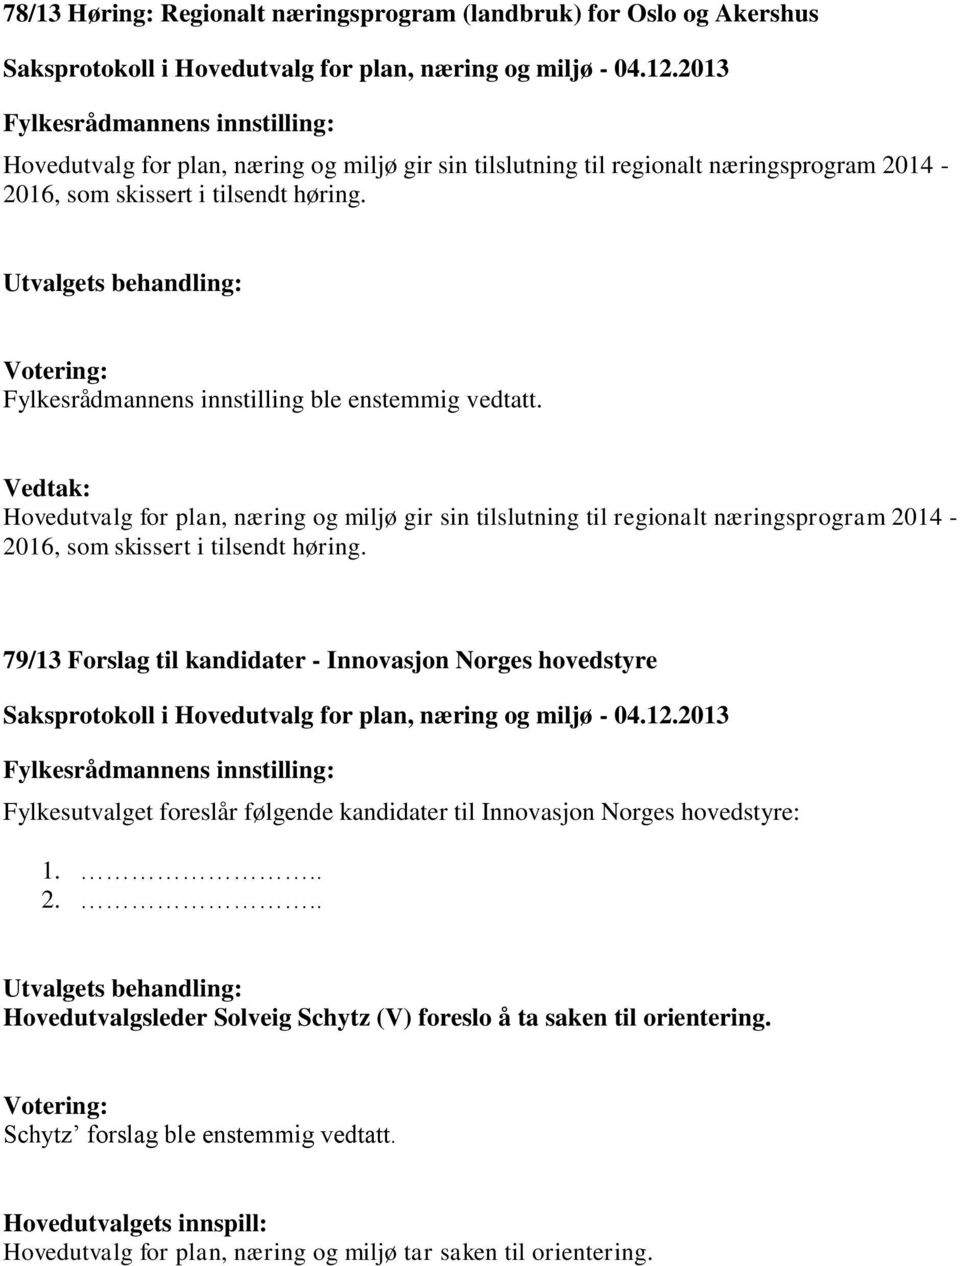 79/13 Forslag til kandidater - Innovasjon Norges hovedstyre Fylkesutvalget foreslår følgende kandidater til Innovasjon Norges hovedstyre: 1... 2.